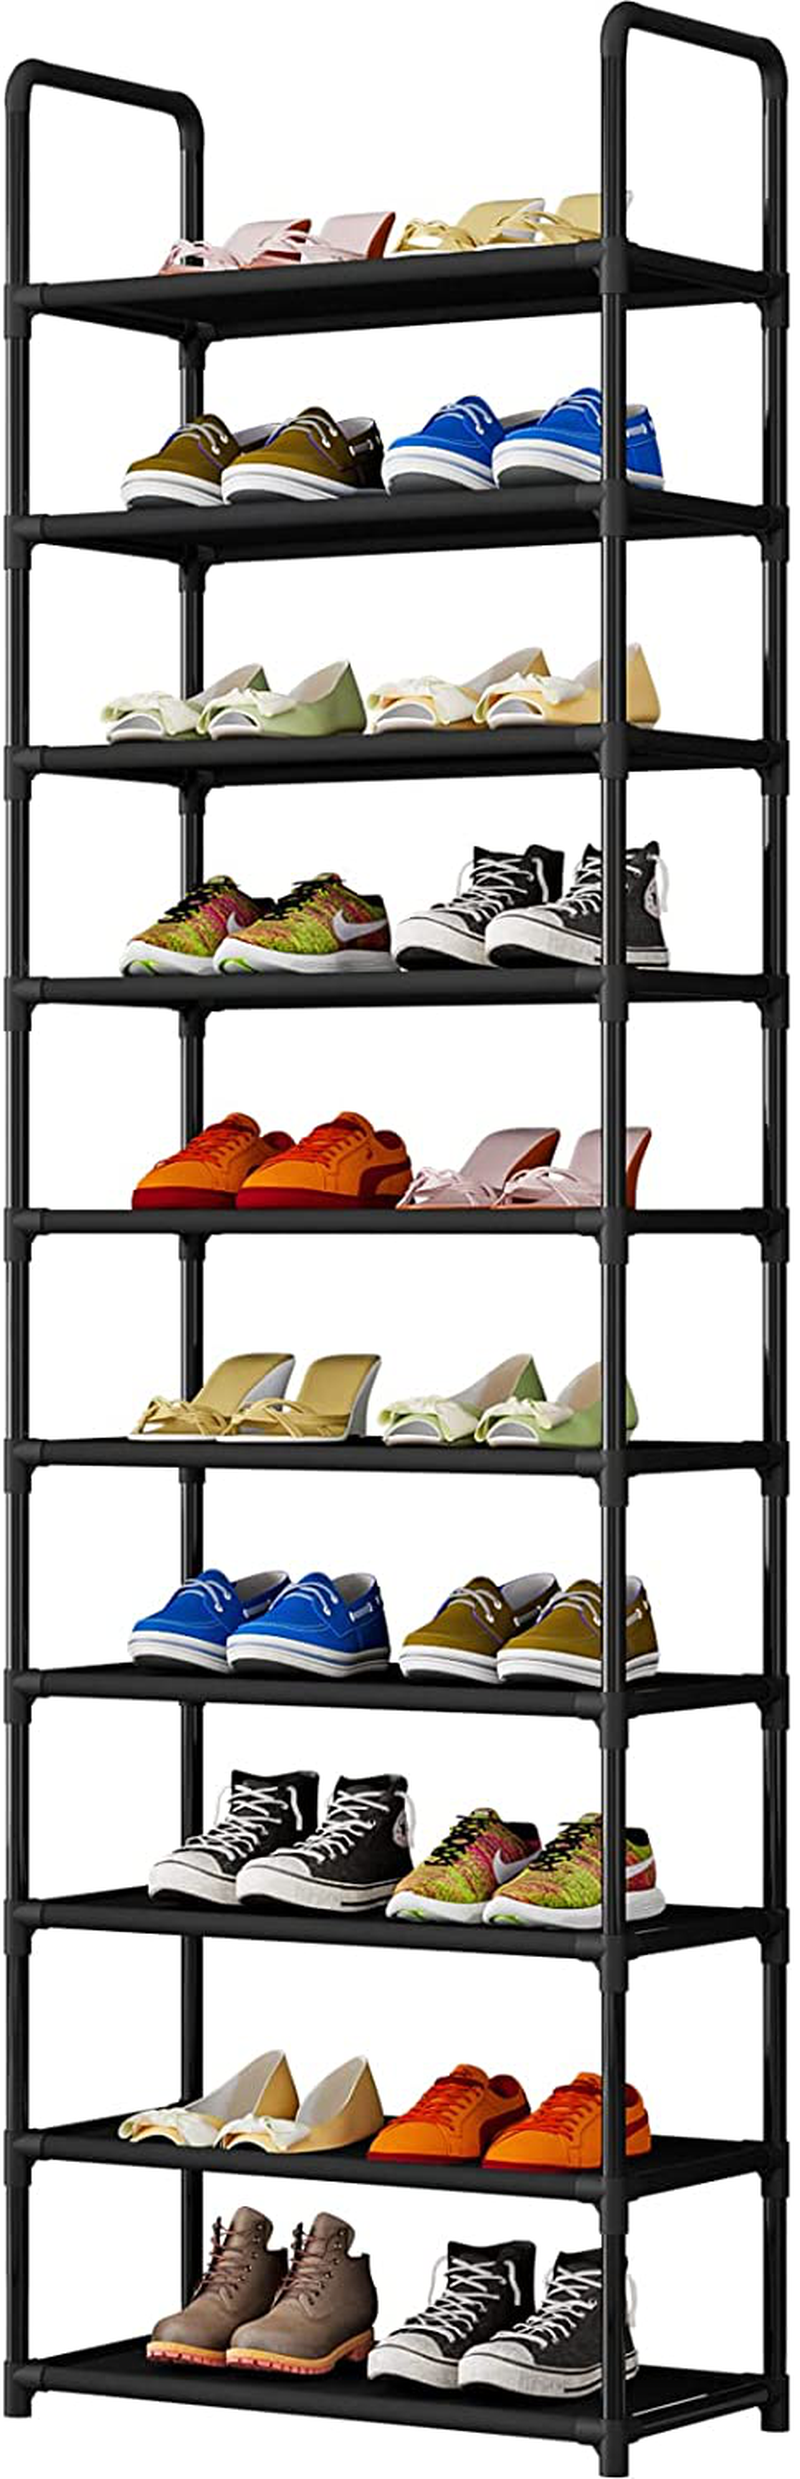 LINZINAR Shoe Rack Organizer 10 Tier Space Saving Shoe Shelf Storage Sturdy Metal Shoe Tower for Closet Entryway Bedroom, Black